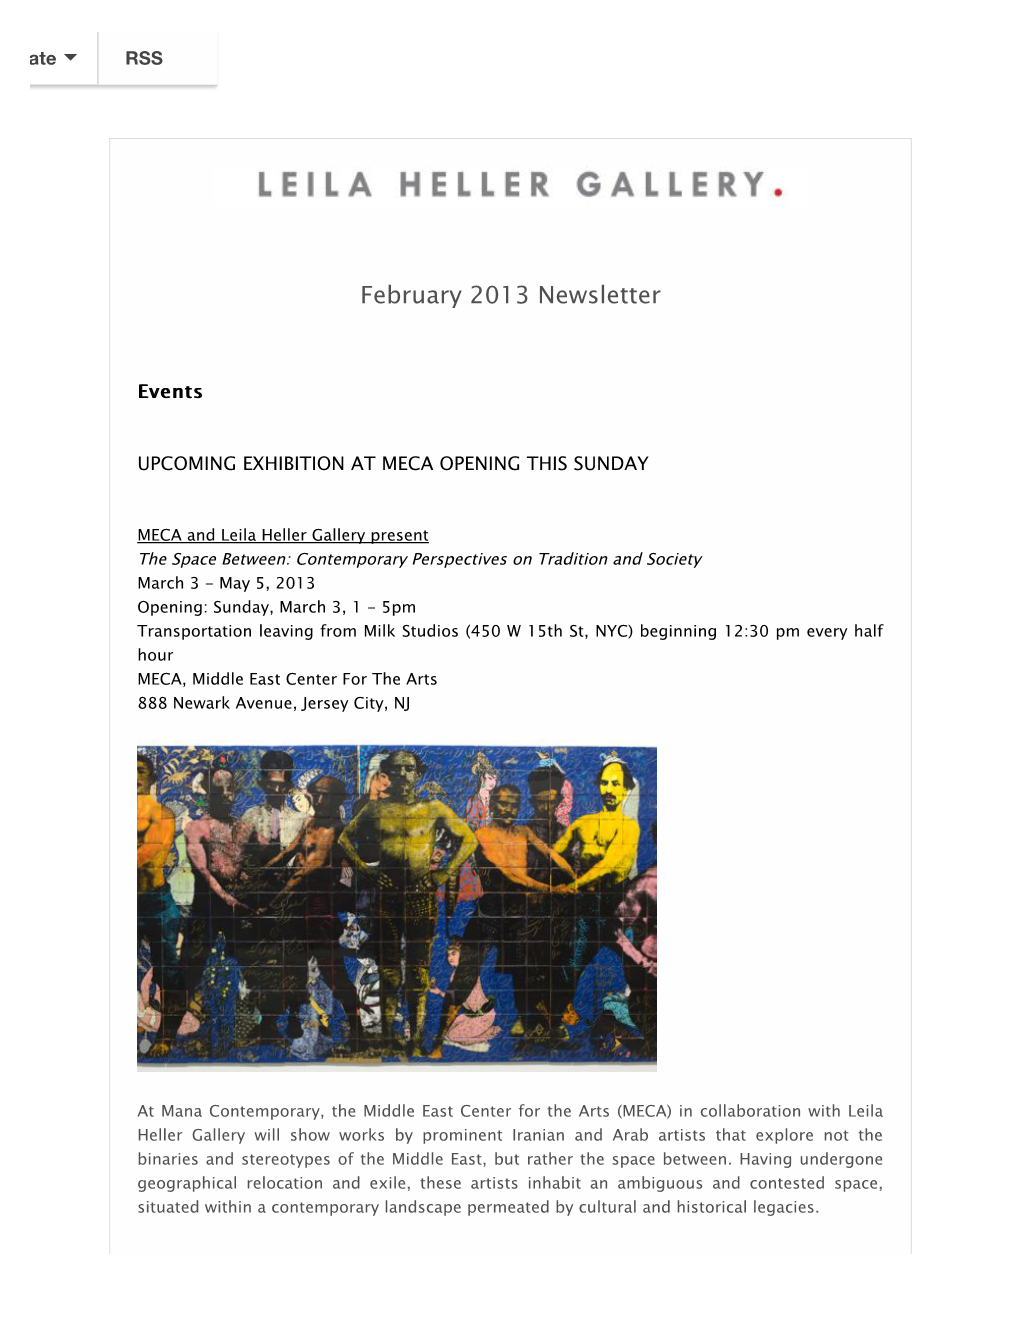 Leila Heller Gallery in the News, MECA Opening Reminder